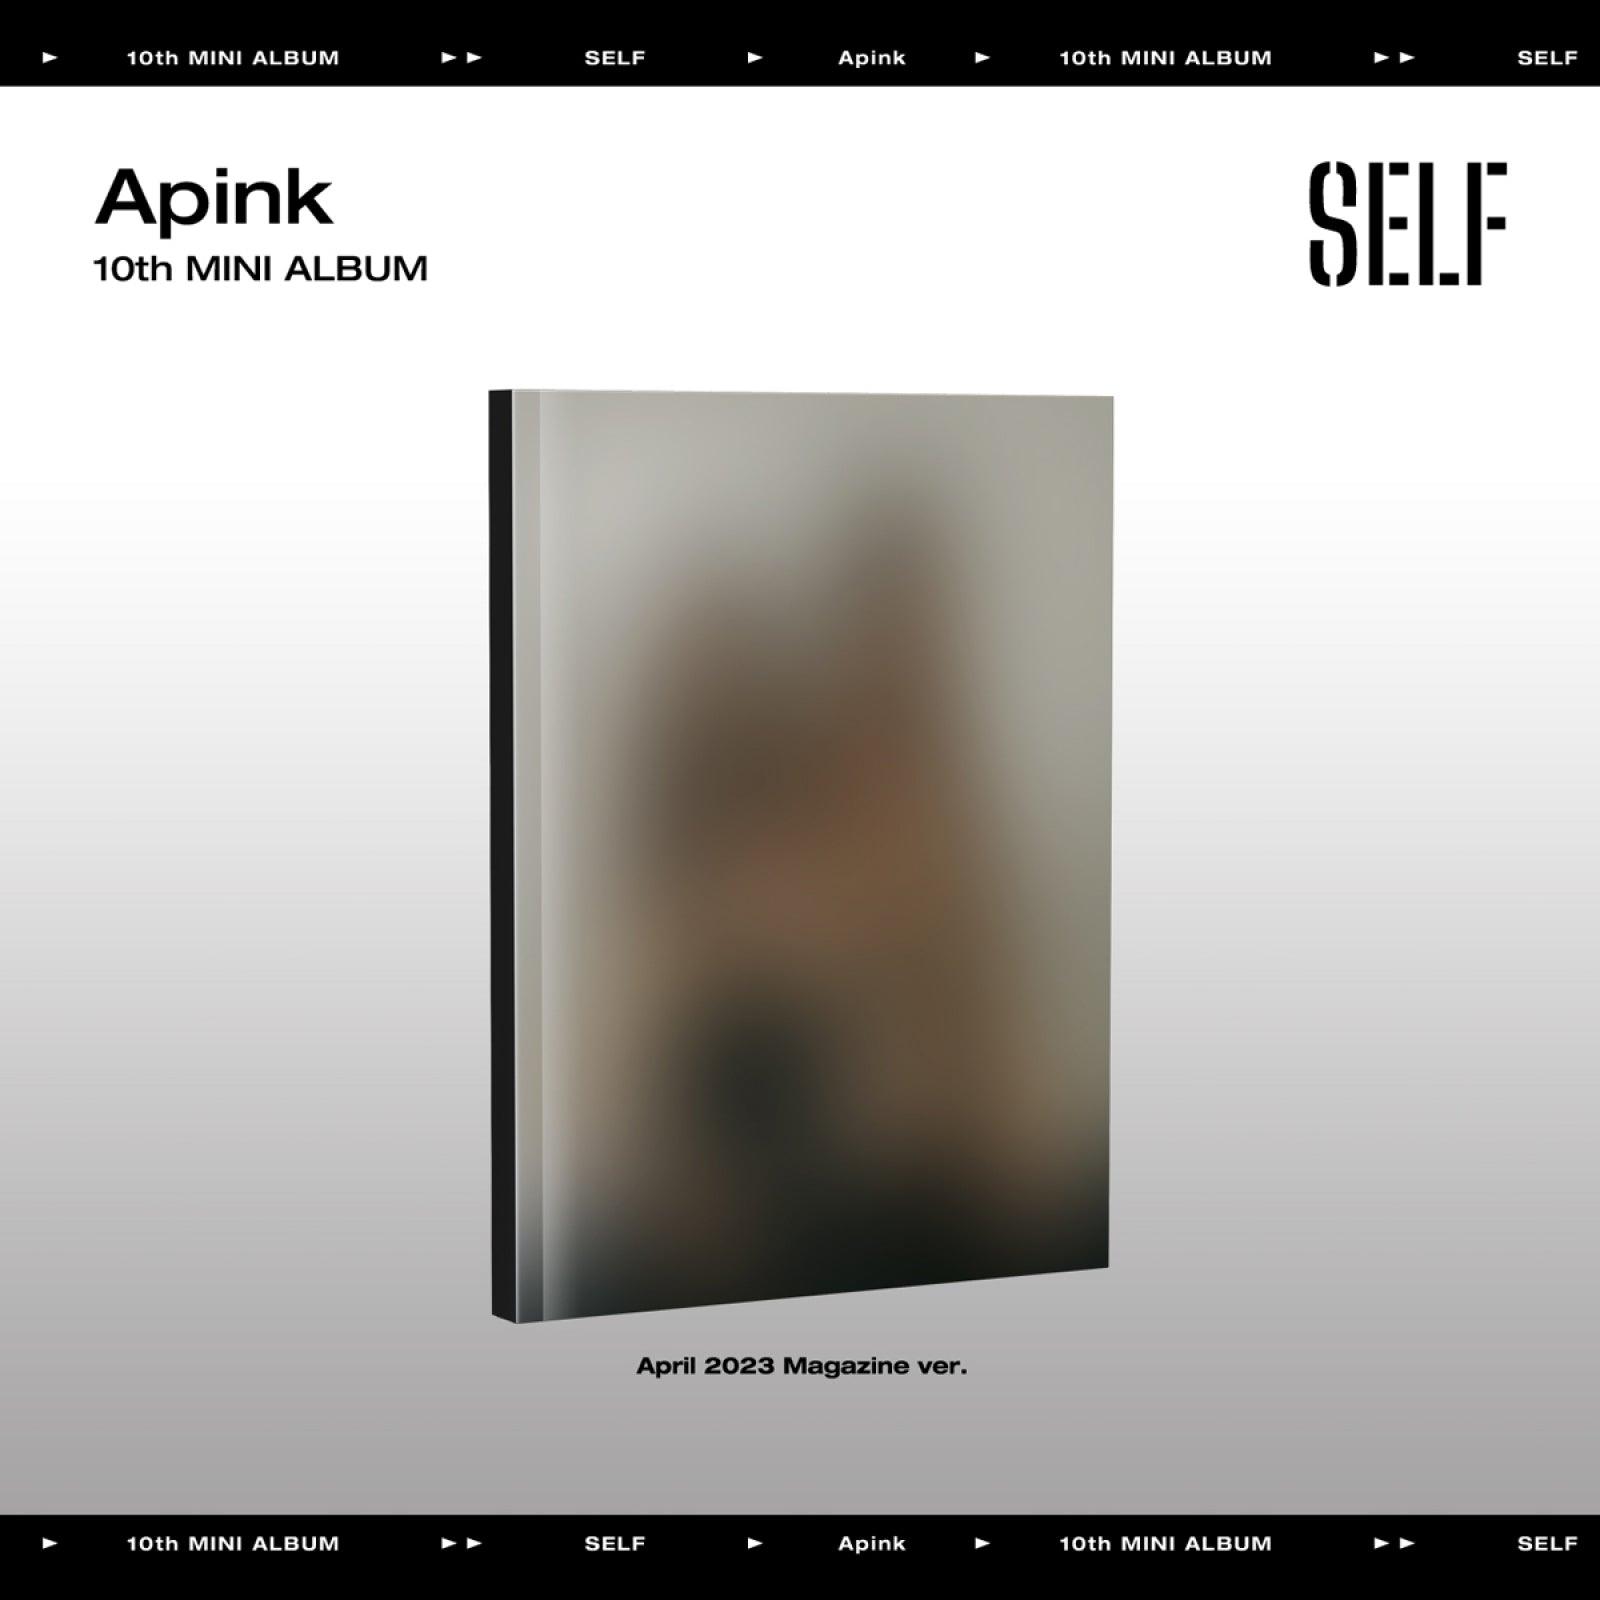 [PRE-ORDER] APINK - SELF / 10th Mini Album (April 2023 Magazine Ver.) - Shopping Around the World with Goodsnjoy